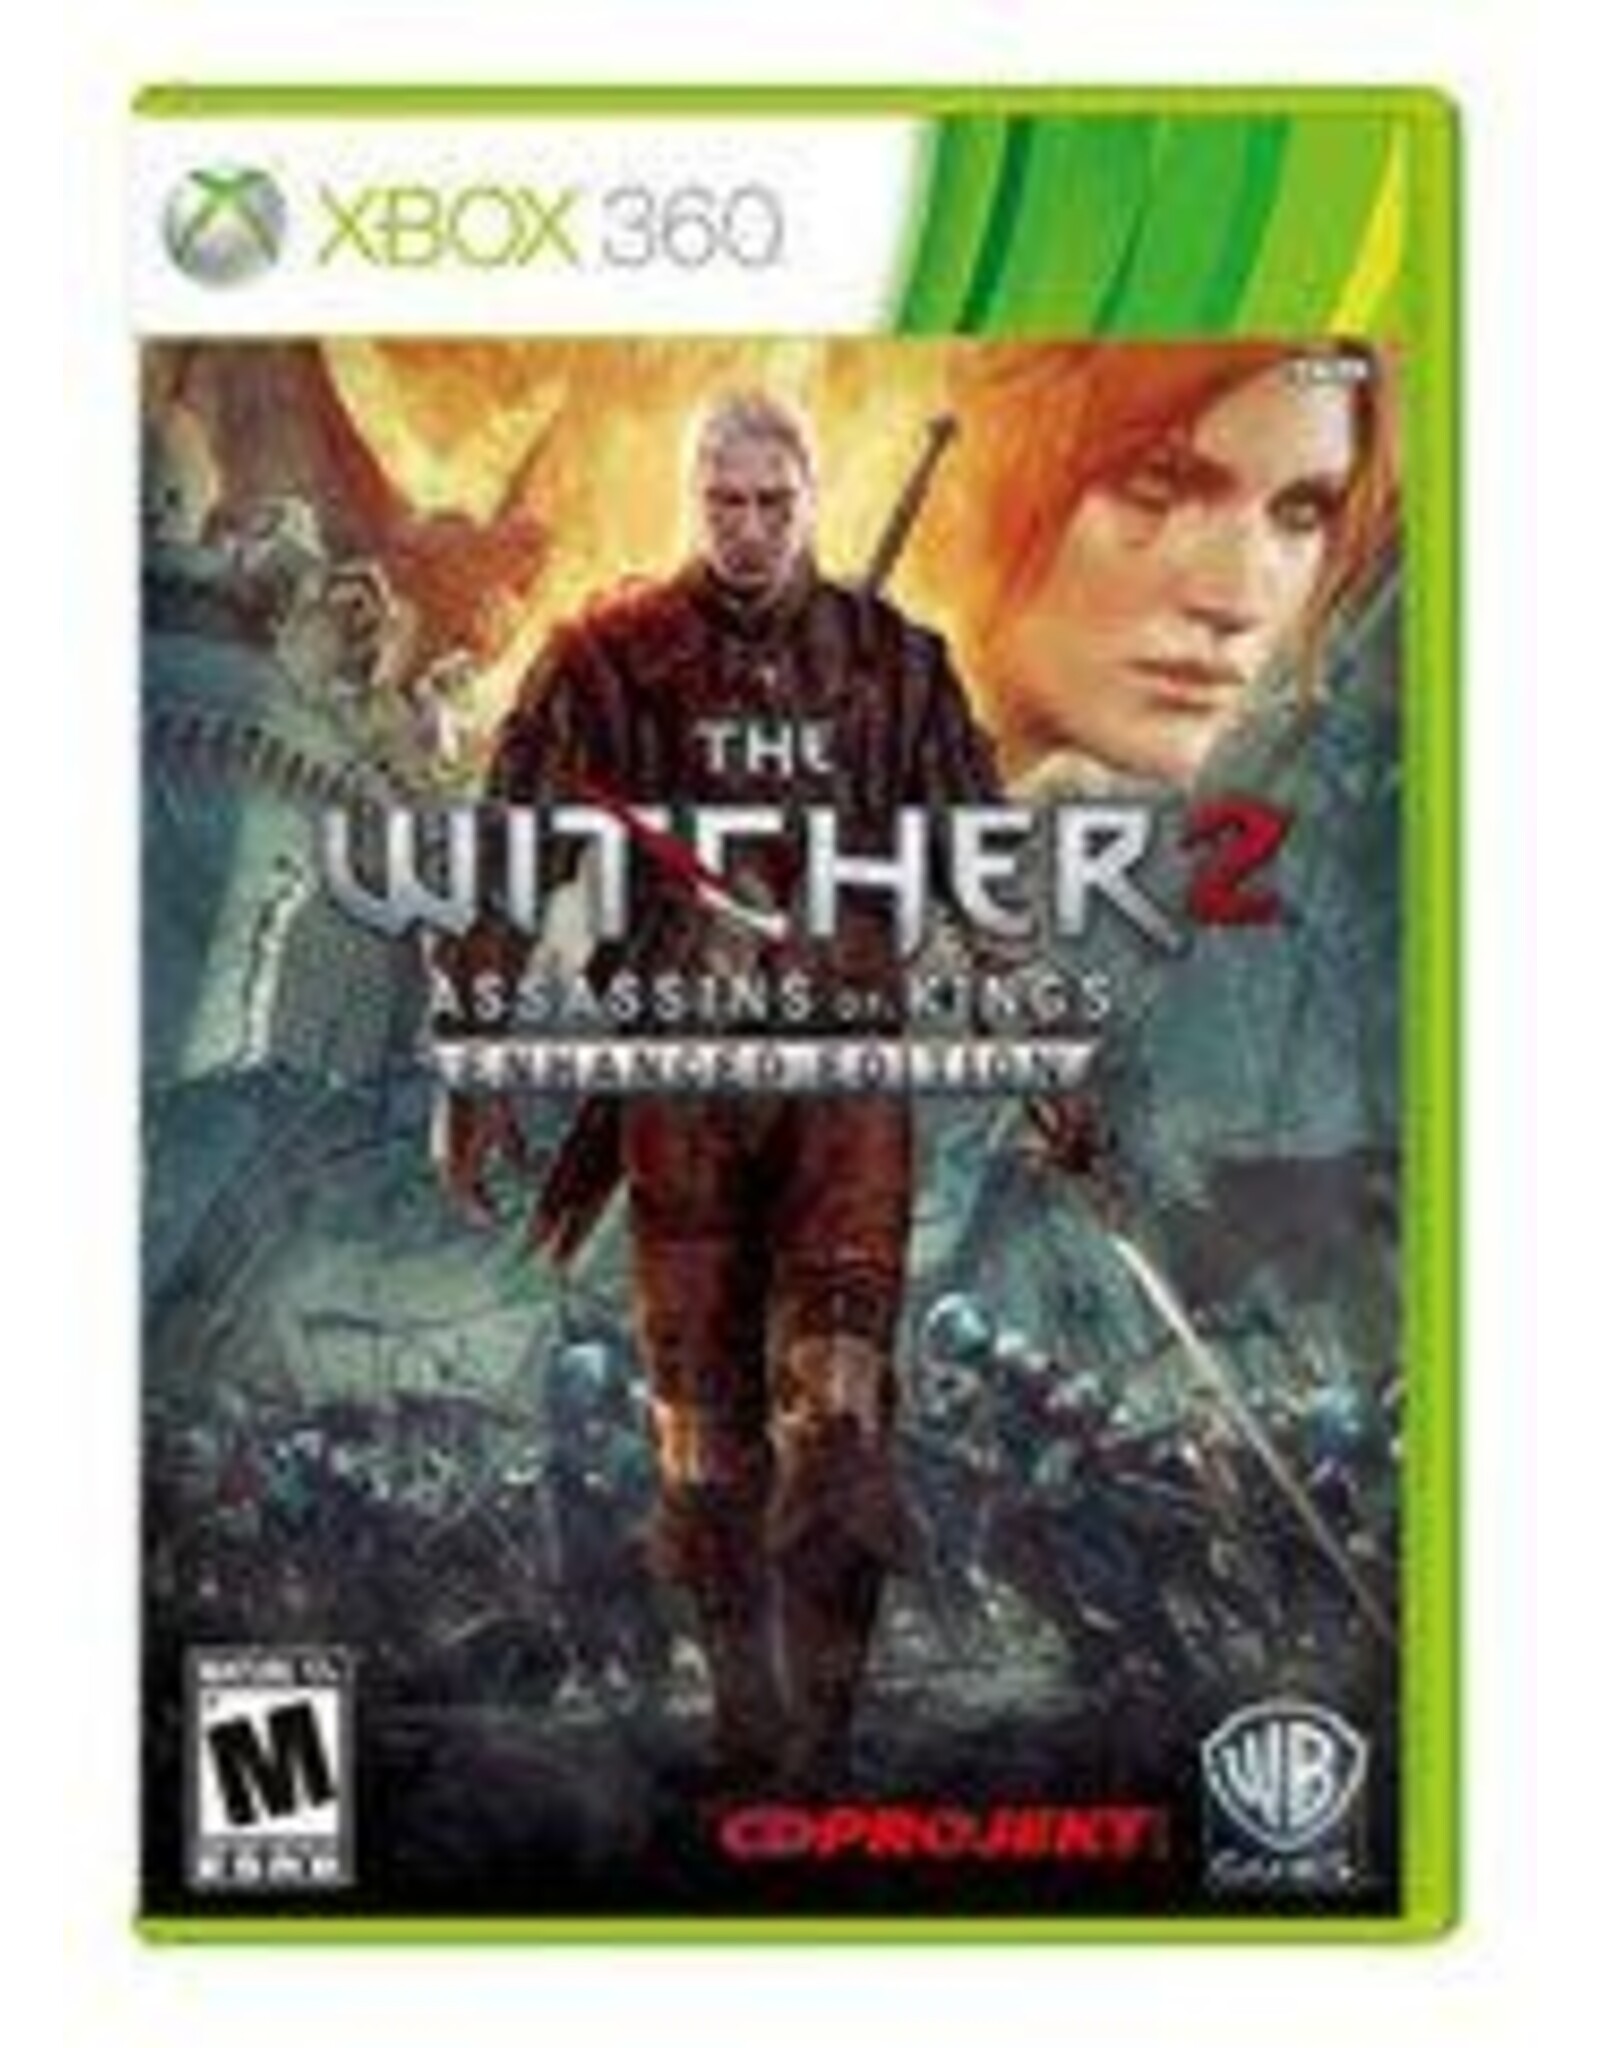 Xbox 360 Witcher 2: Assassins of Kings Enhanced Edition (Big Box CiB)